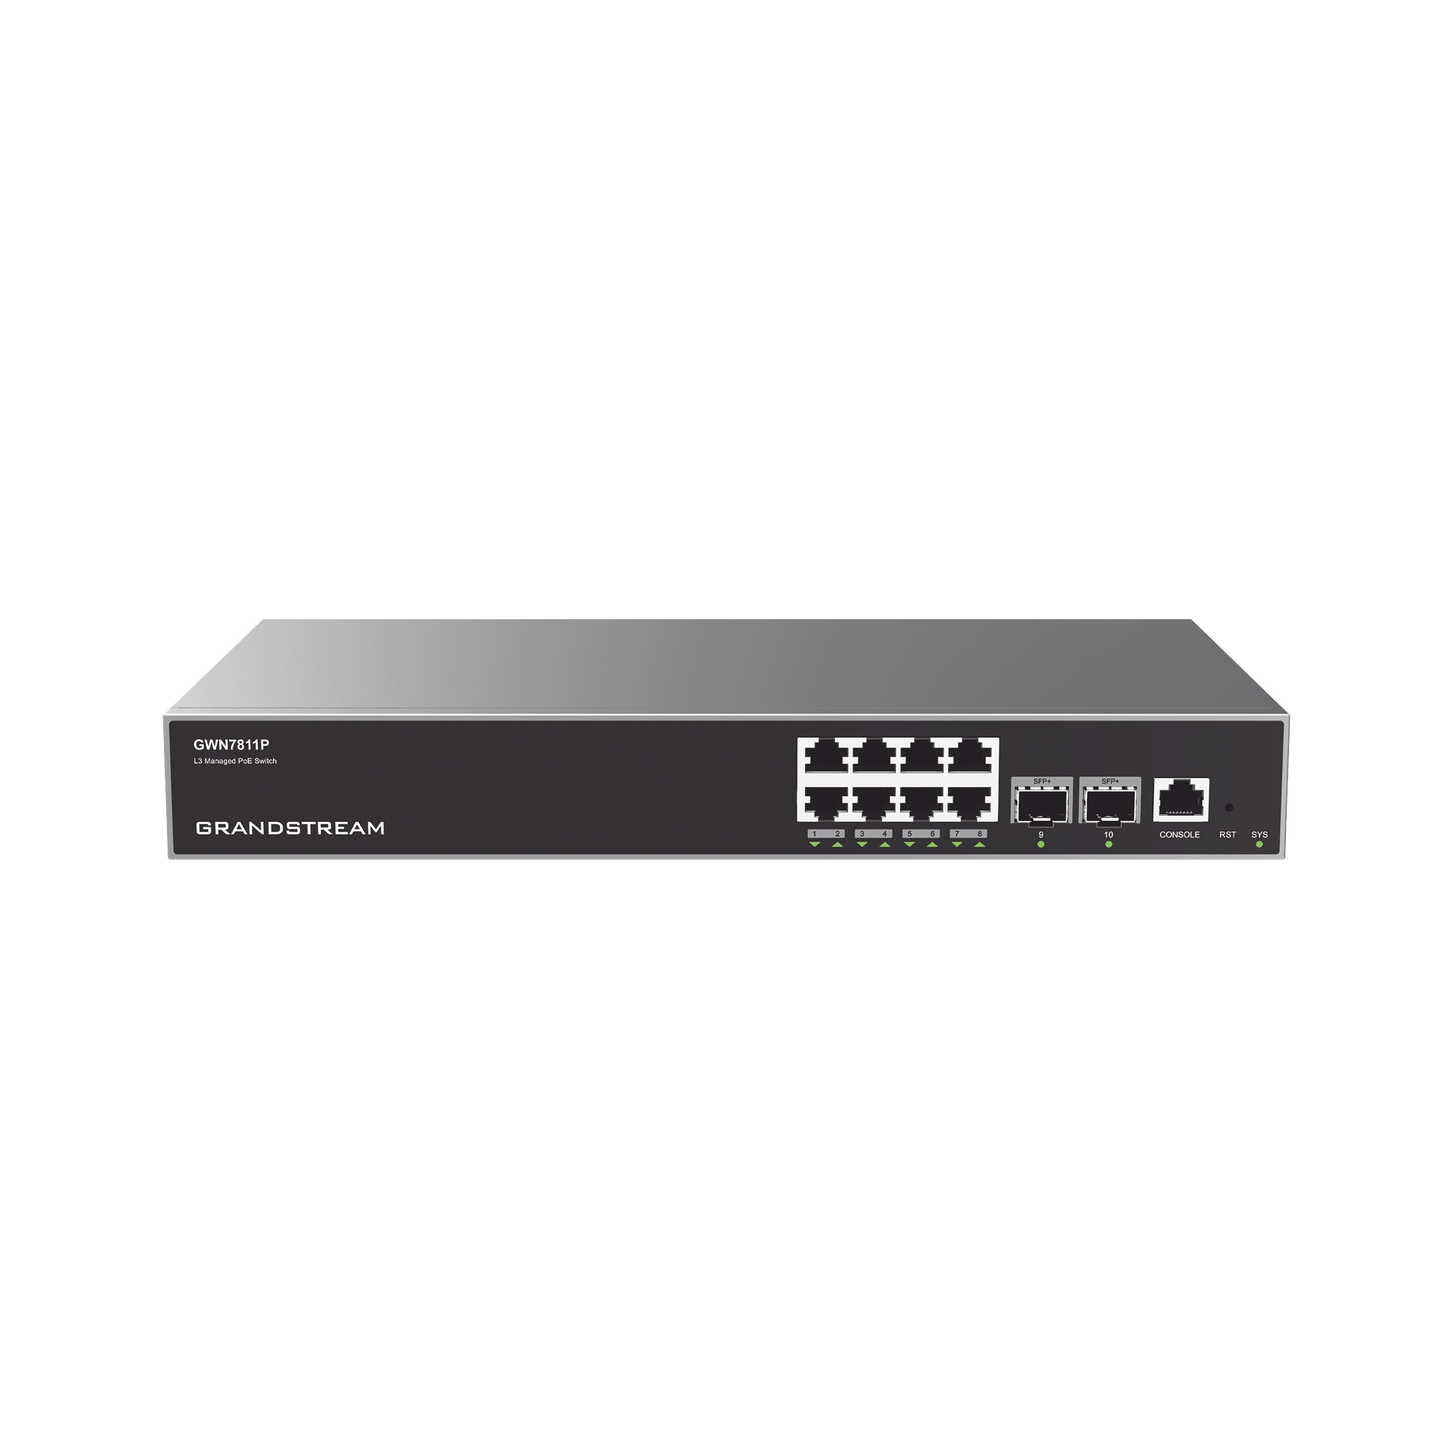 Switch Capa 3 PoE+ Administrable / 8 puertos 10/100/1000 Mbps + 2 Puertos SFP+ de 10 Gigabits / Hasta 120W / Compatible con GWN Cloud.